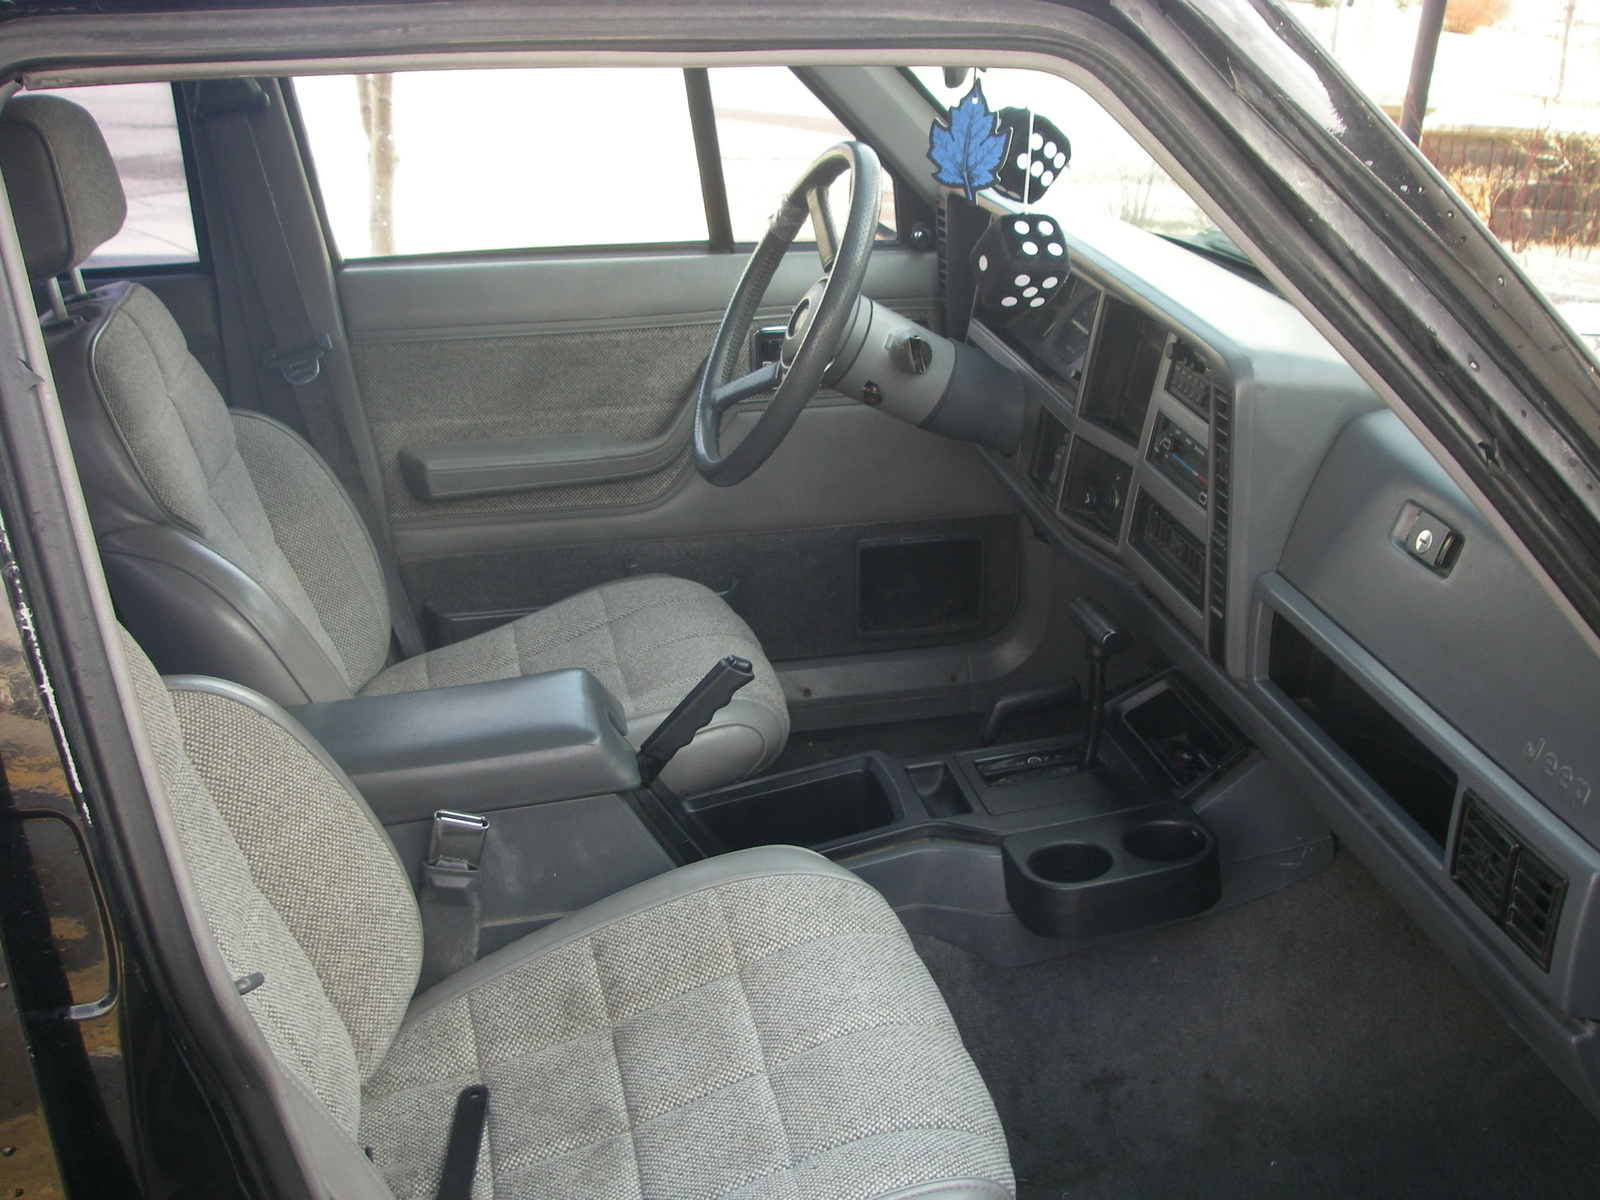 1992 Jeep cherokee laredo interior